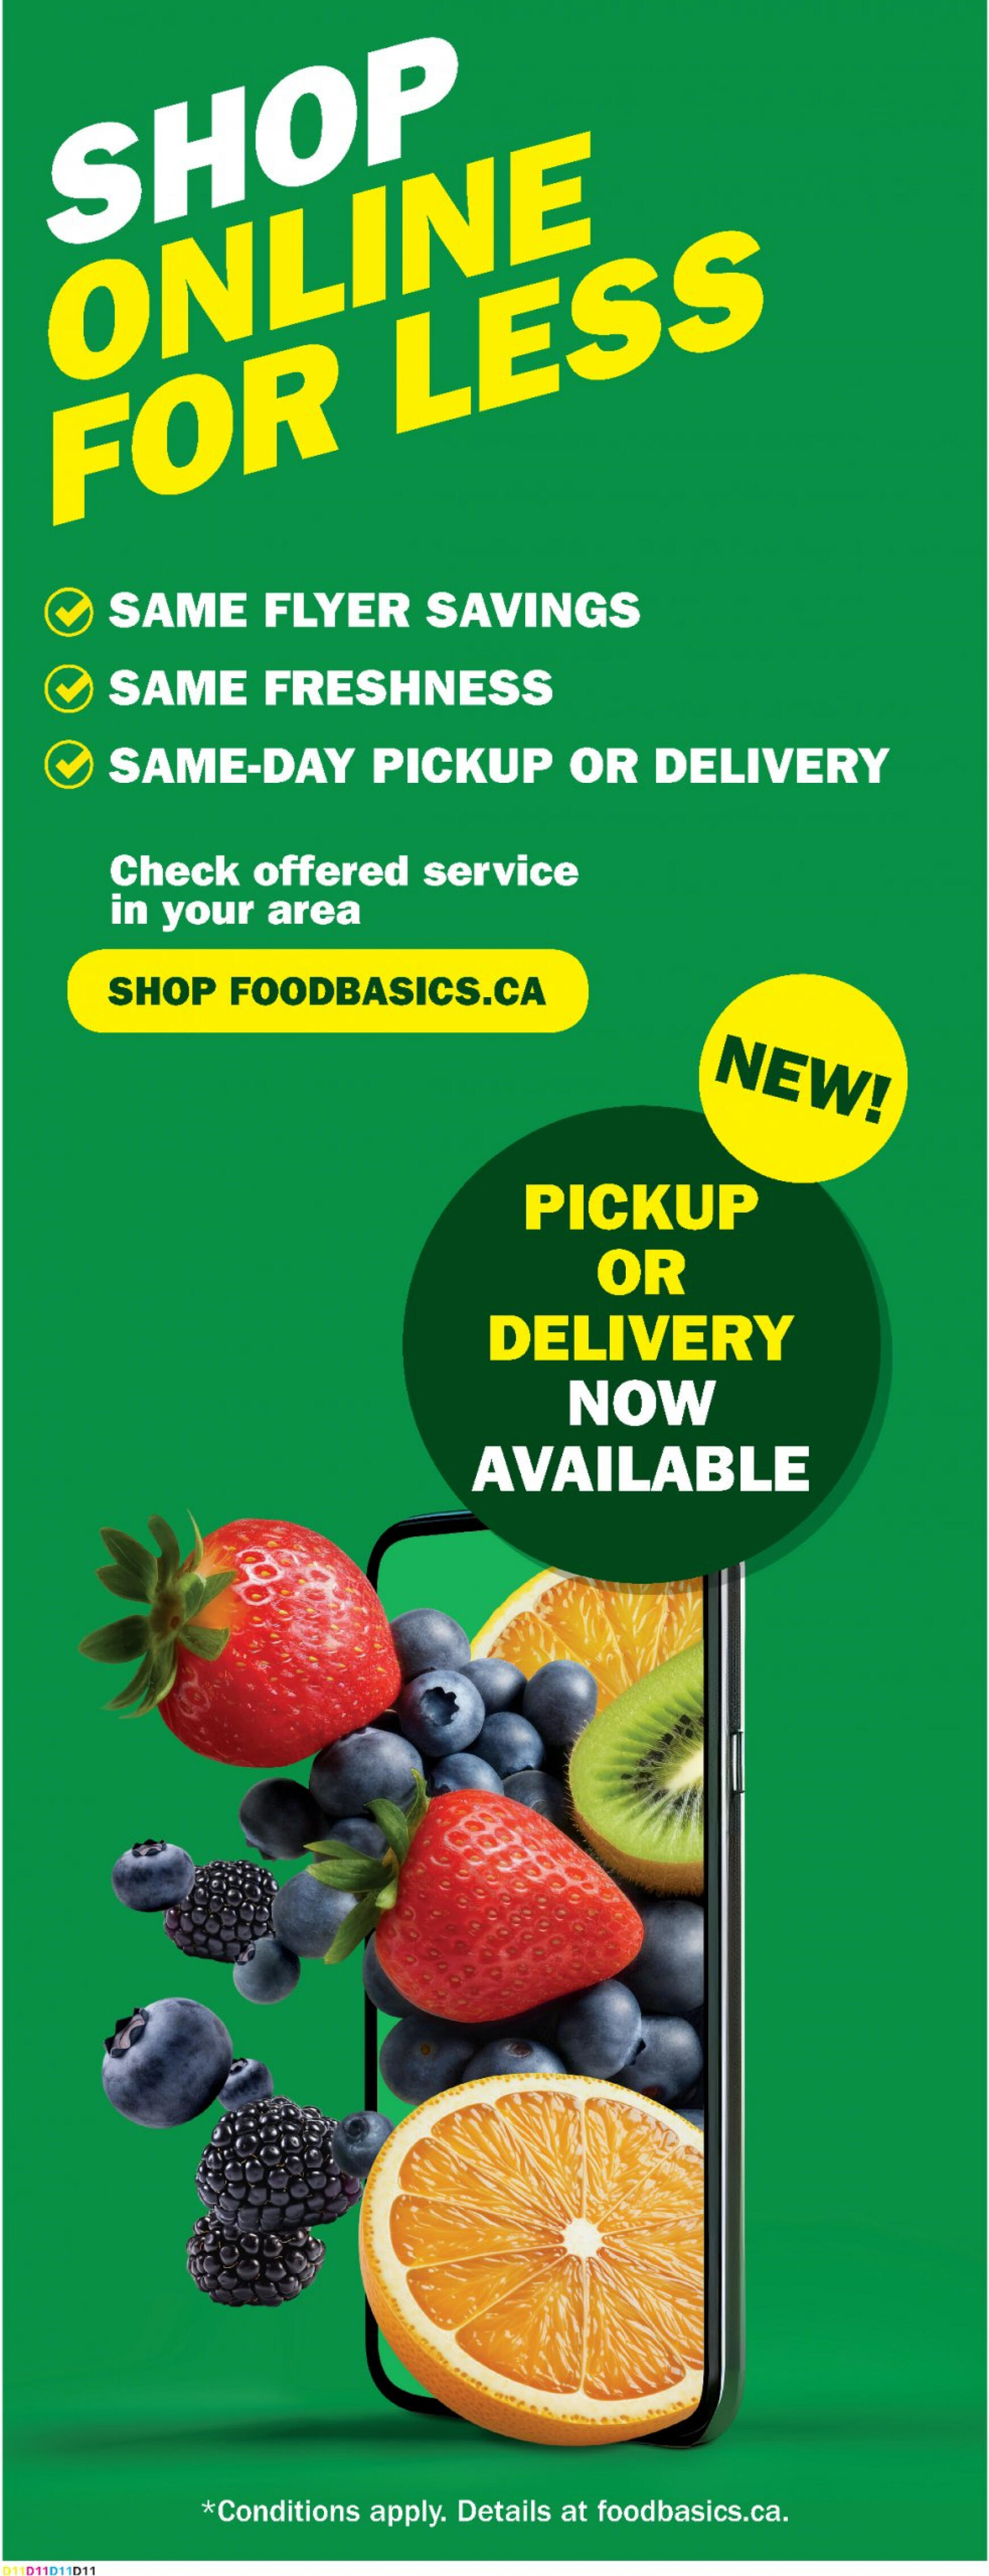 food-basics - Food Basics flyer current 09.05. - 15.05. - page: 5